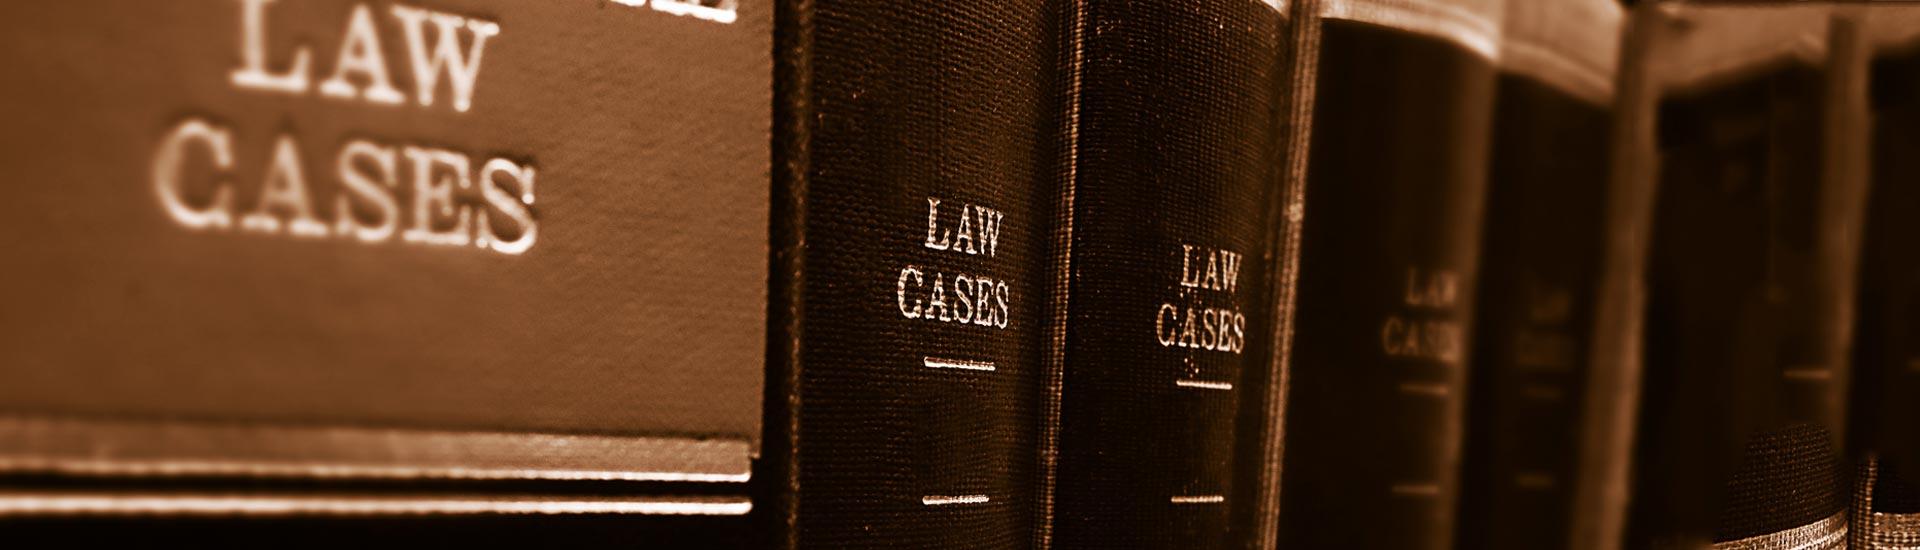 Law Books On a Shelf